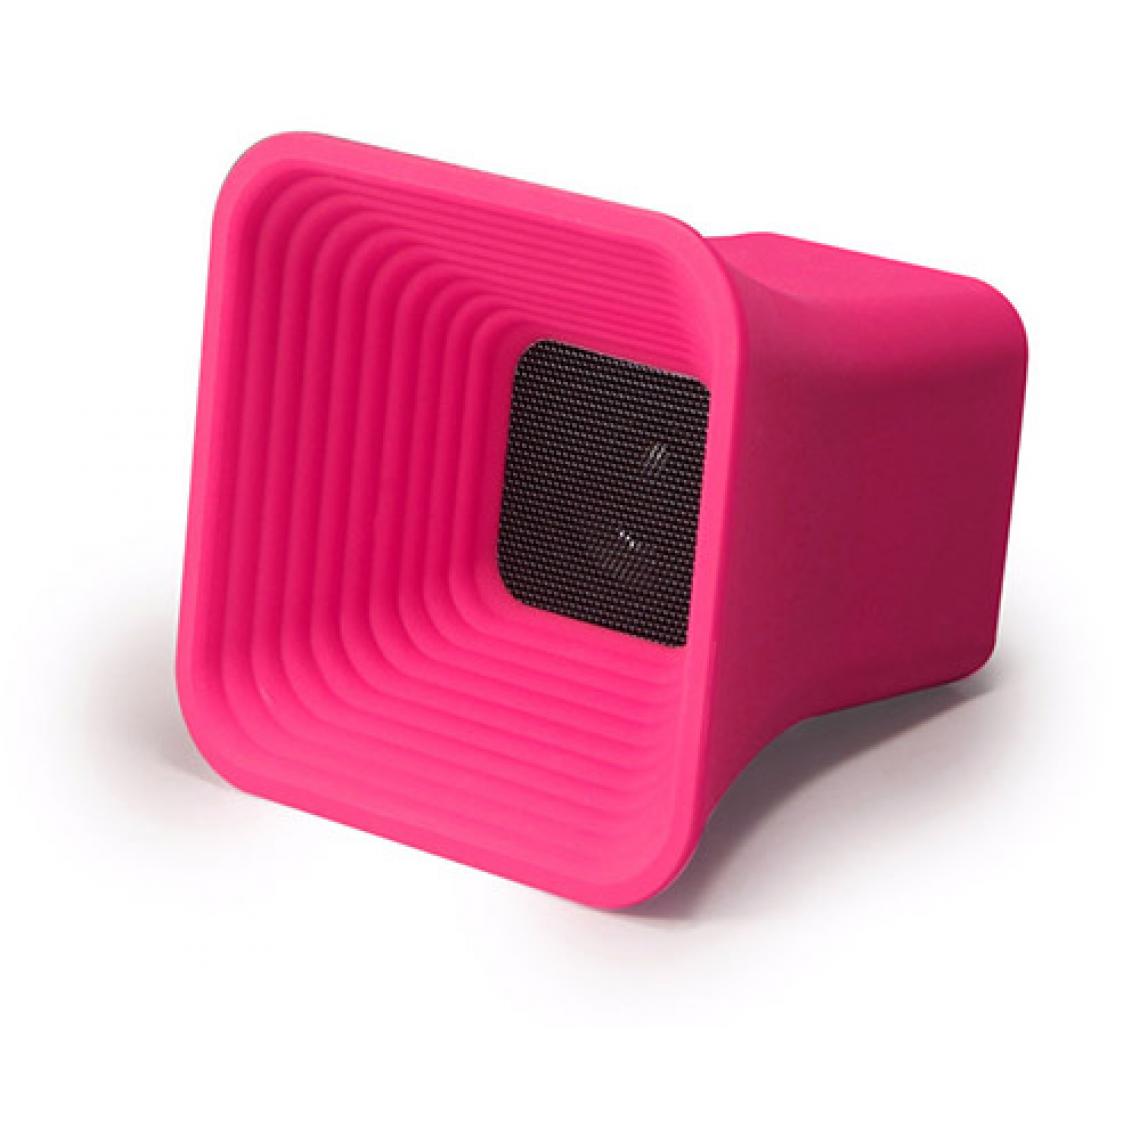 Camry - haut-parleur Bluetooth 3W rose - Enceintes Hifi